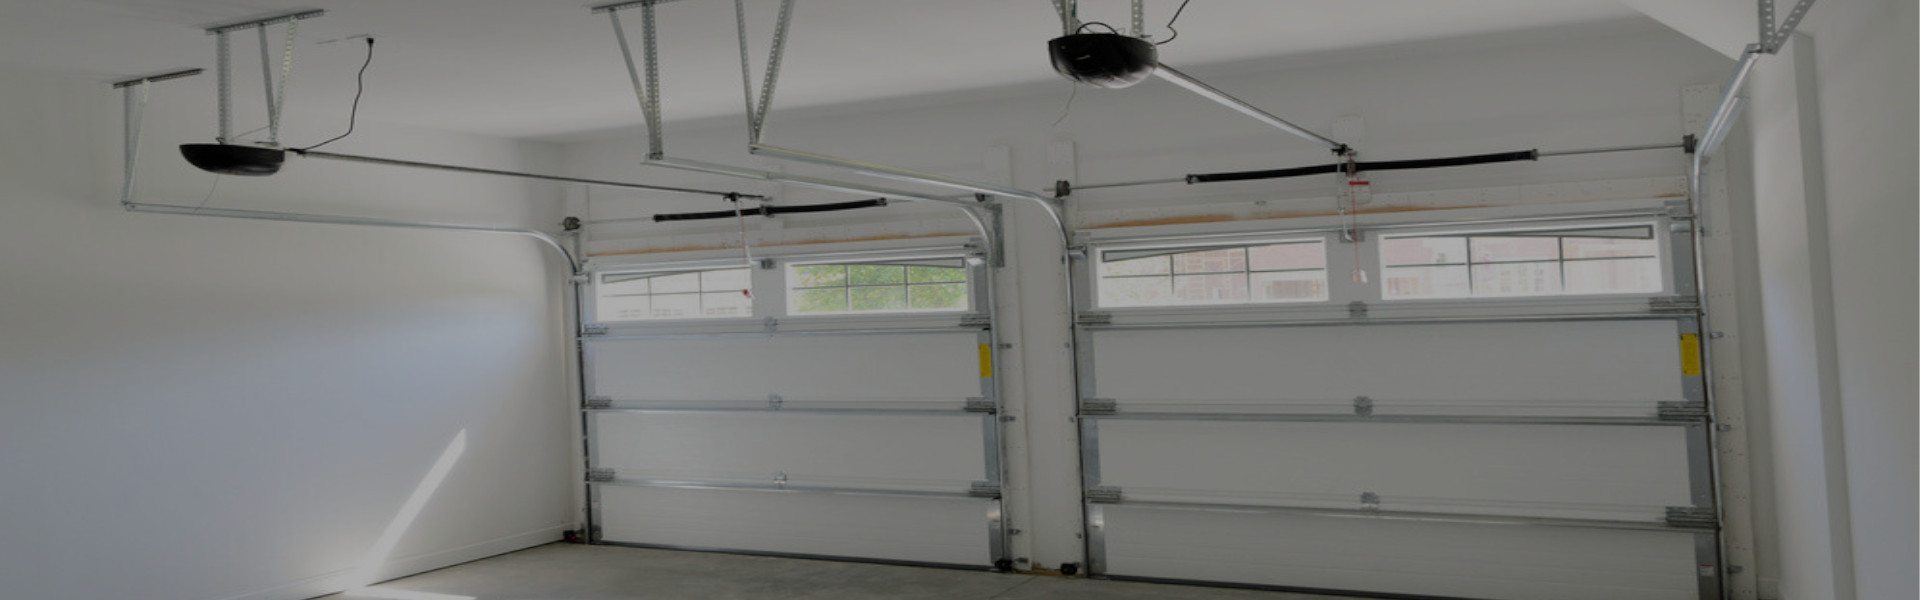 Slider Garage Door Repair, Glaziers in Sydenham, SE26